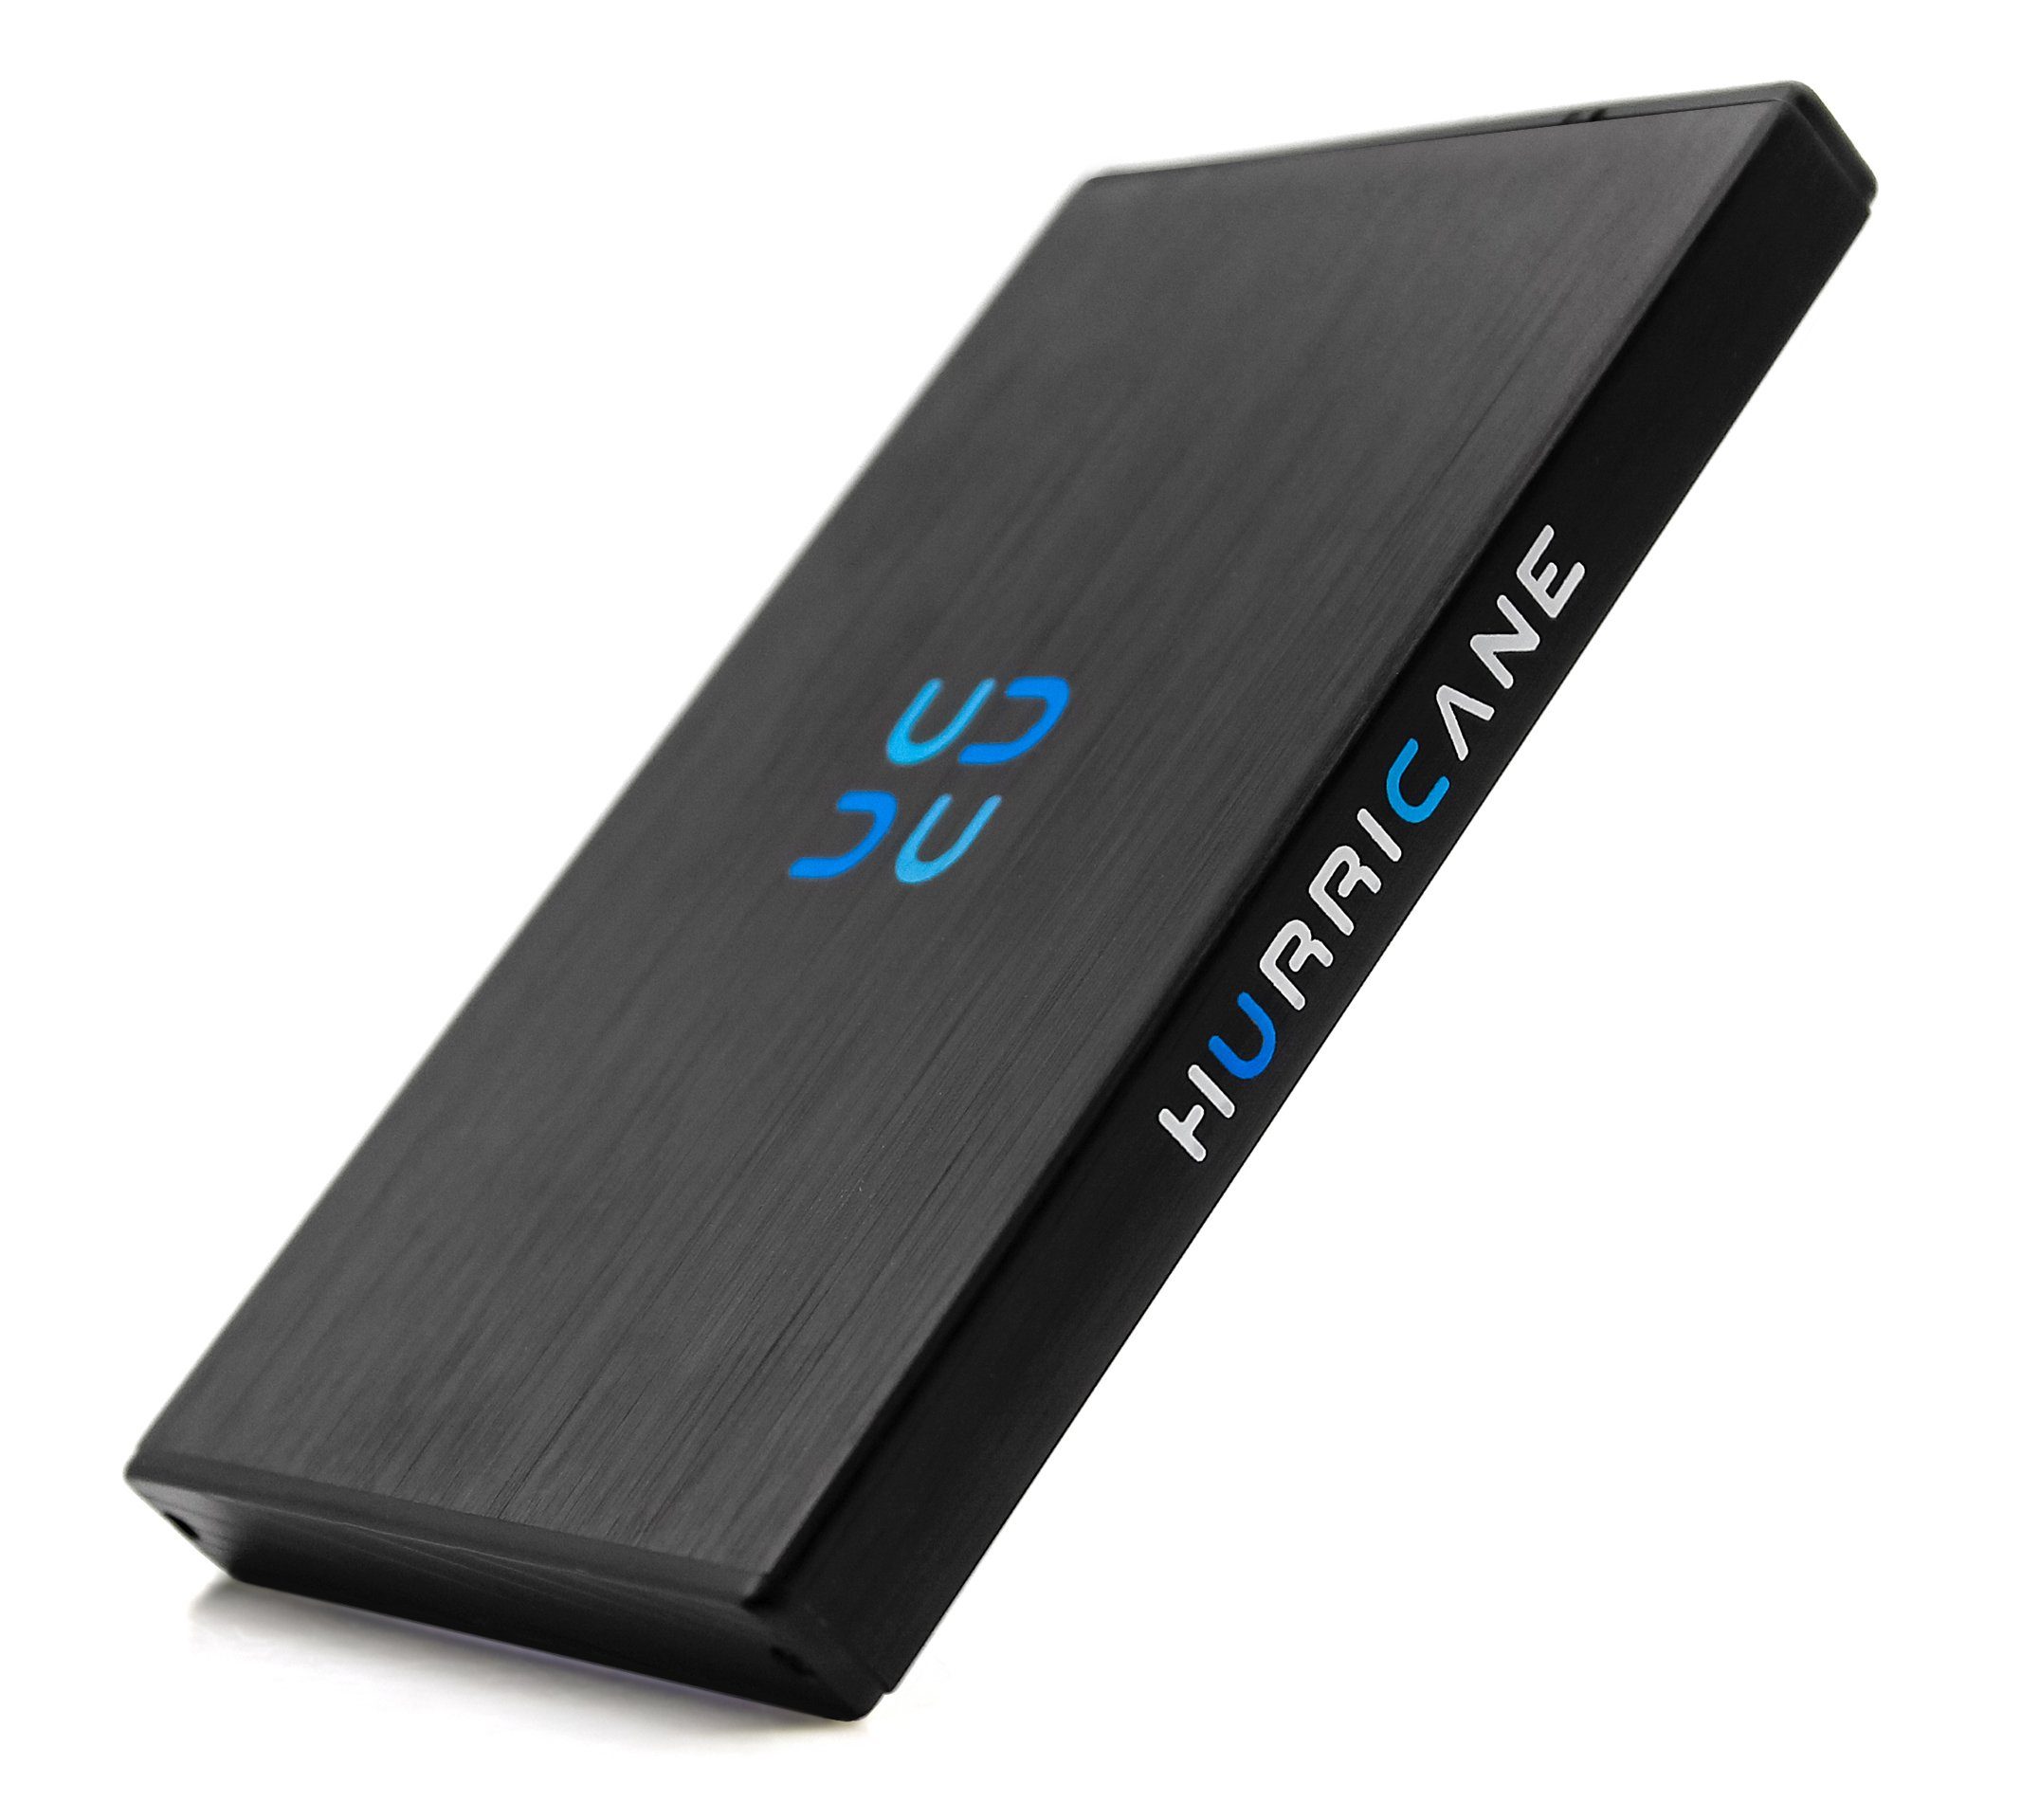 HURRICANE GD25612 portable externe Festplatte 500GB 2,5" USB 3.0 HDD Speicher externe HDD-Festplatte (500GB) 2,5", für PC, Laptop, PS4, PS5, Xbox - kompatibel mit Windows, Mac, Linux